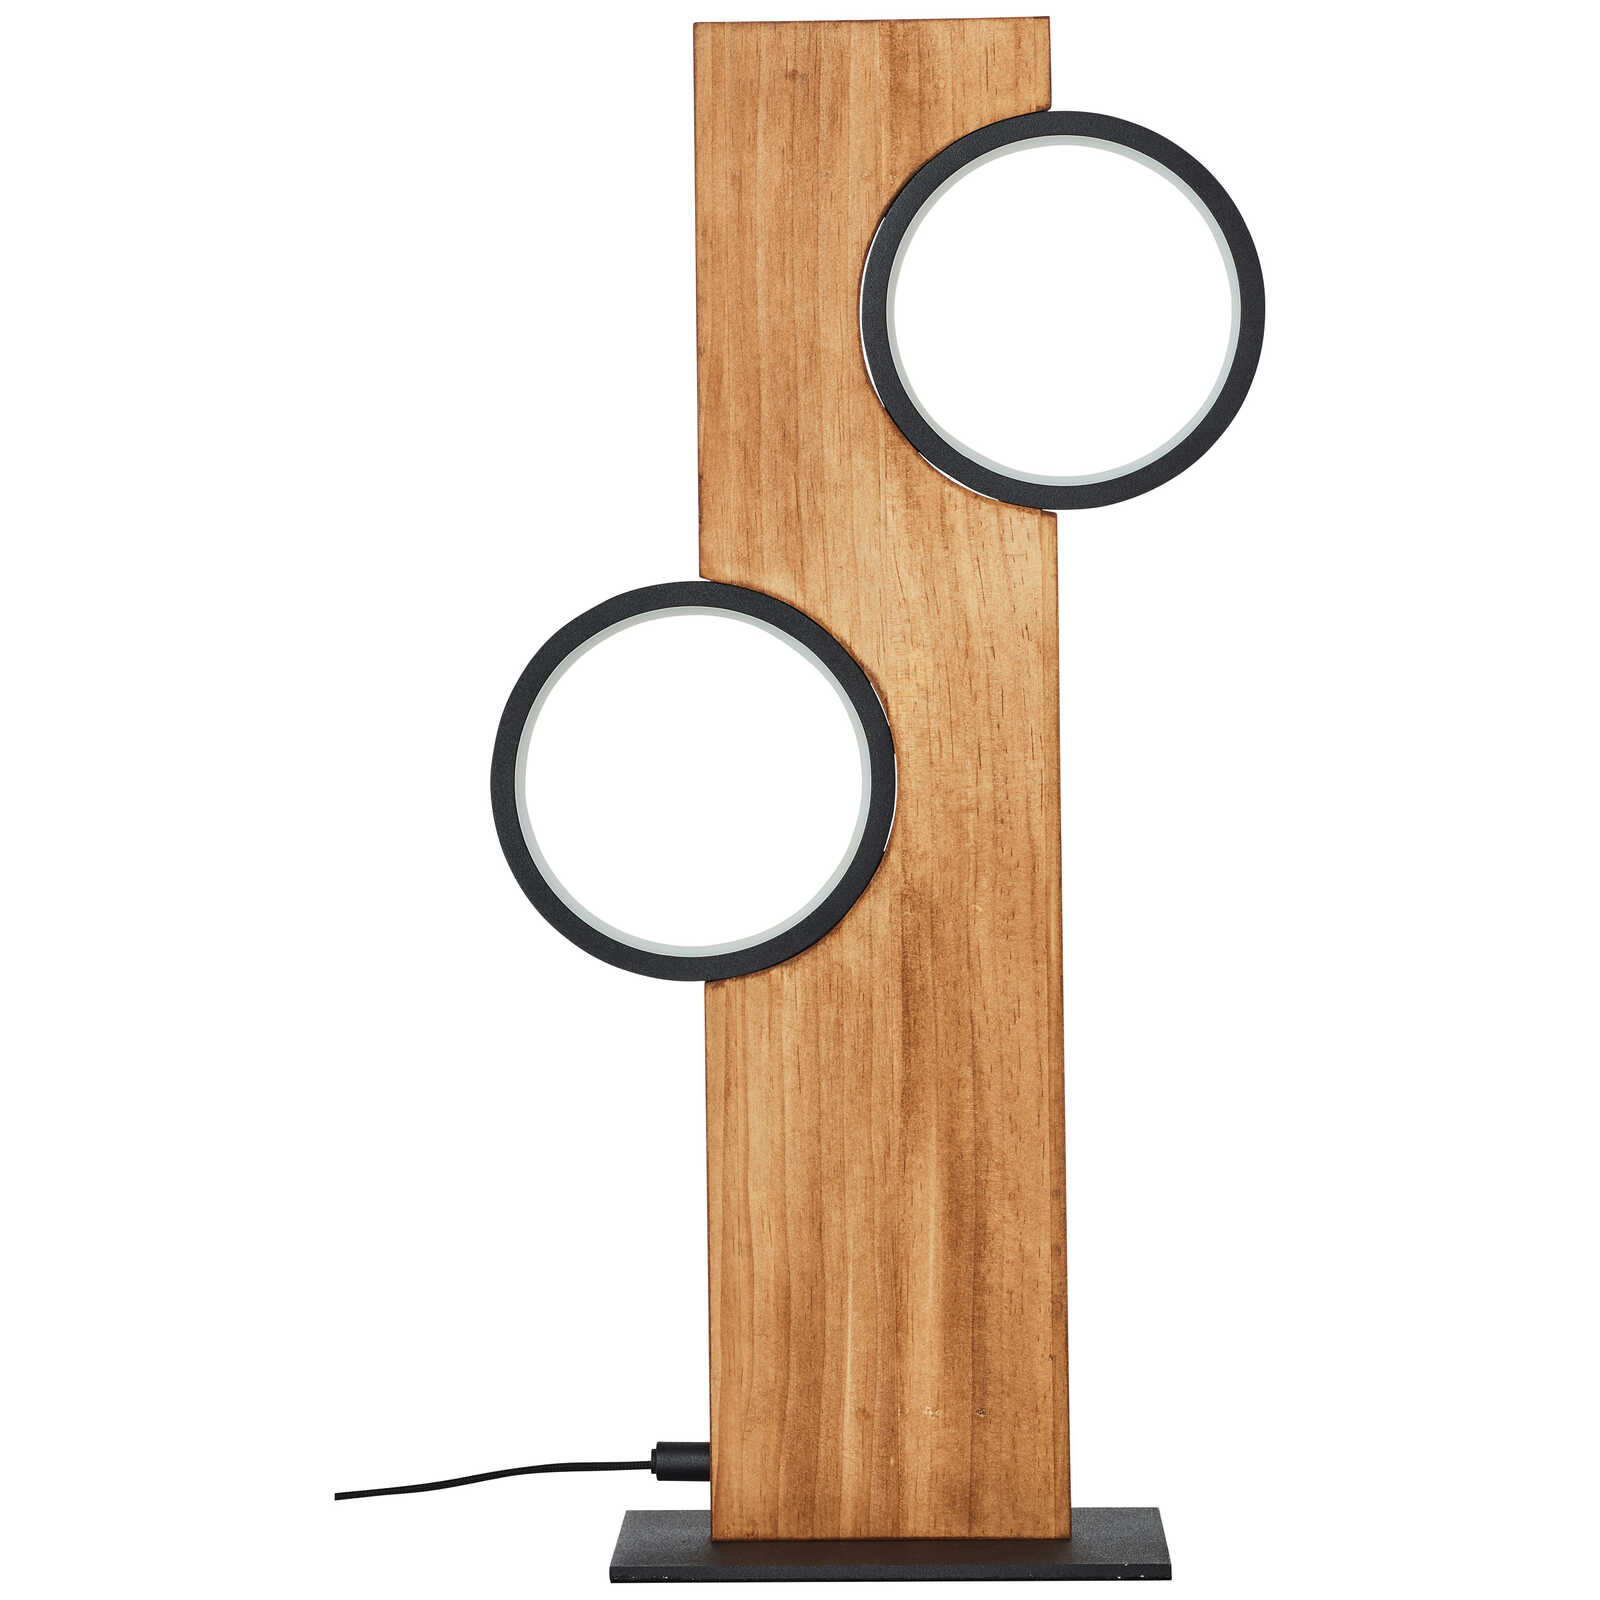             Lámpara de mesa de madera - Elena 2 - Marrón
        